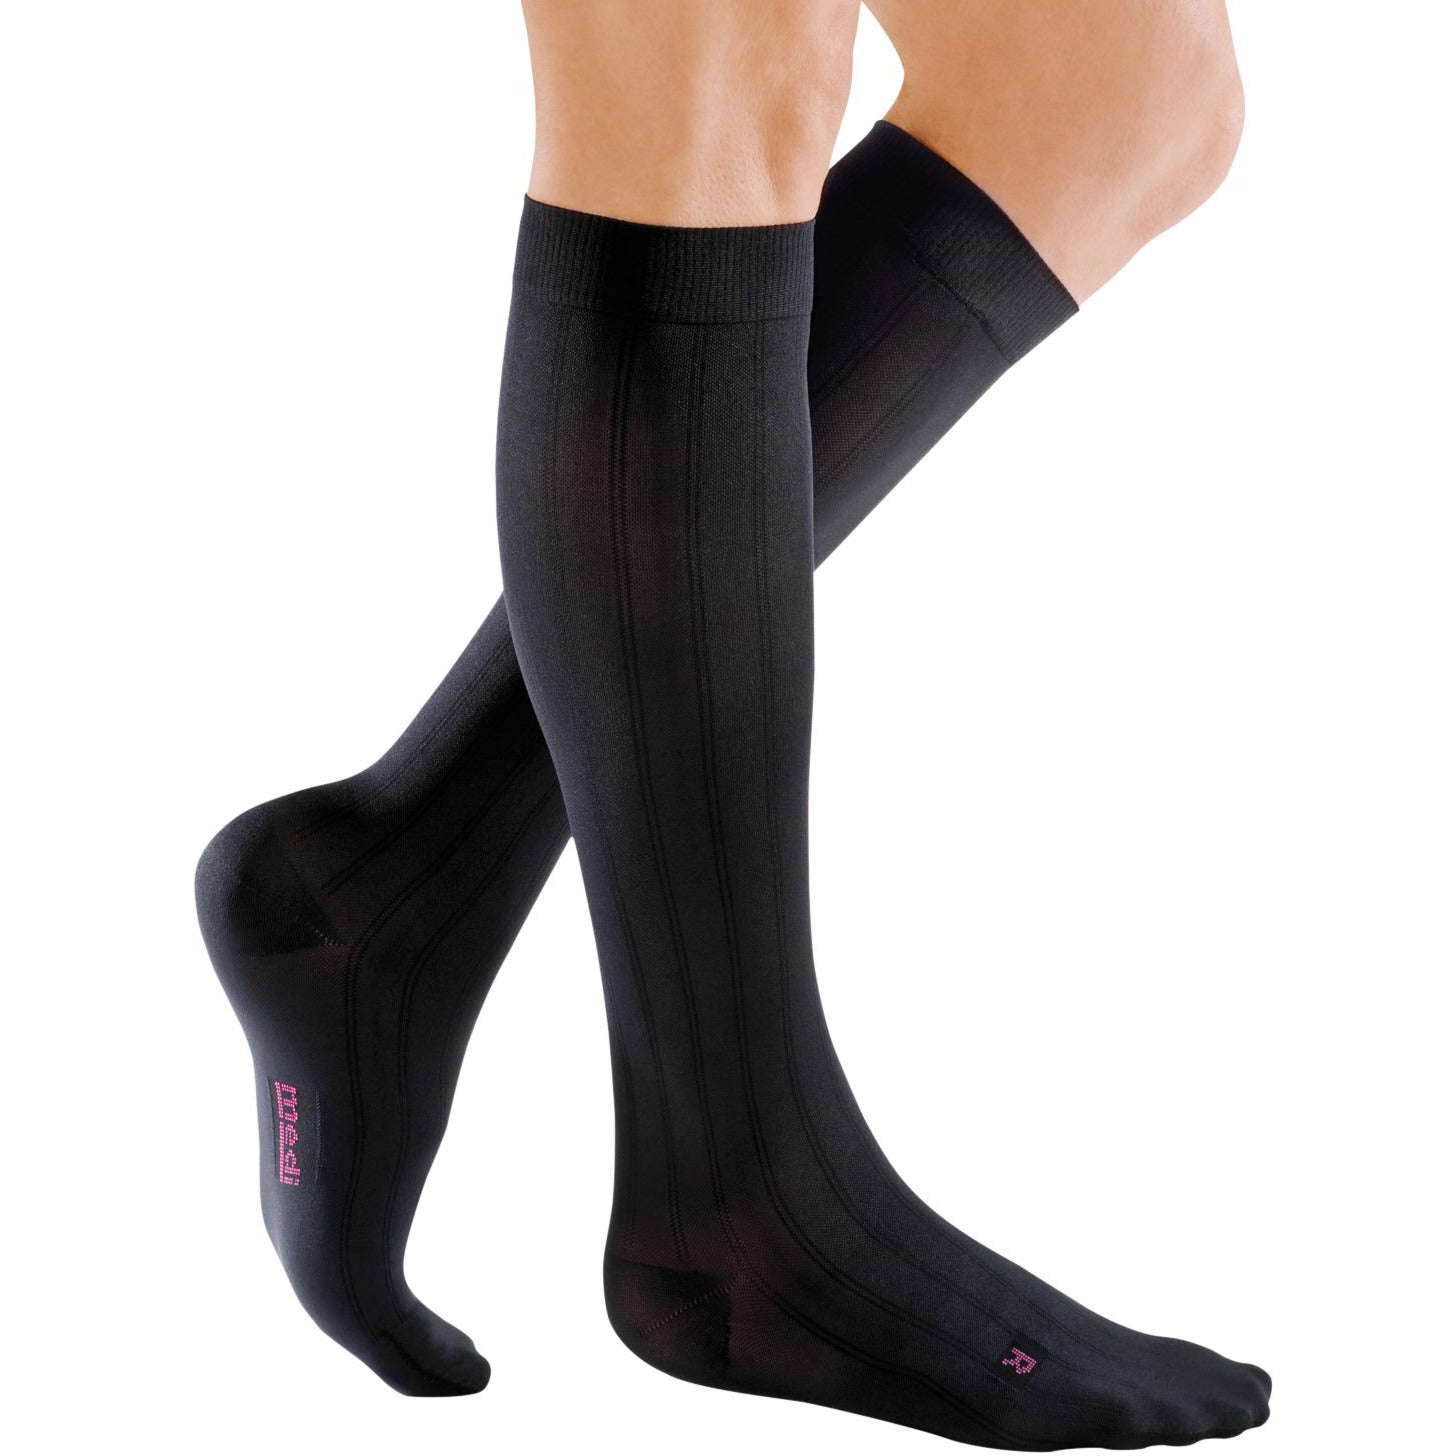 Mediven for Men Classic 20-30 mmHg Knee High, Extra Wide Calf, Black